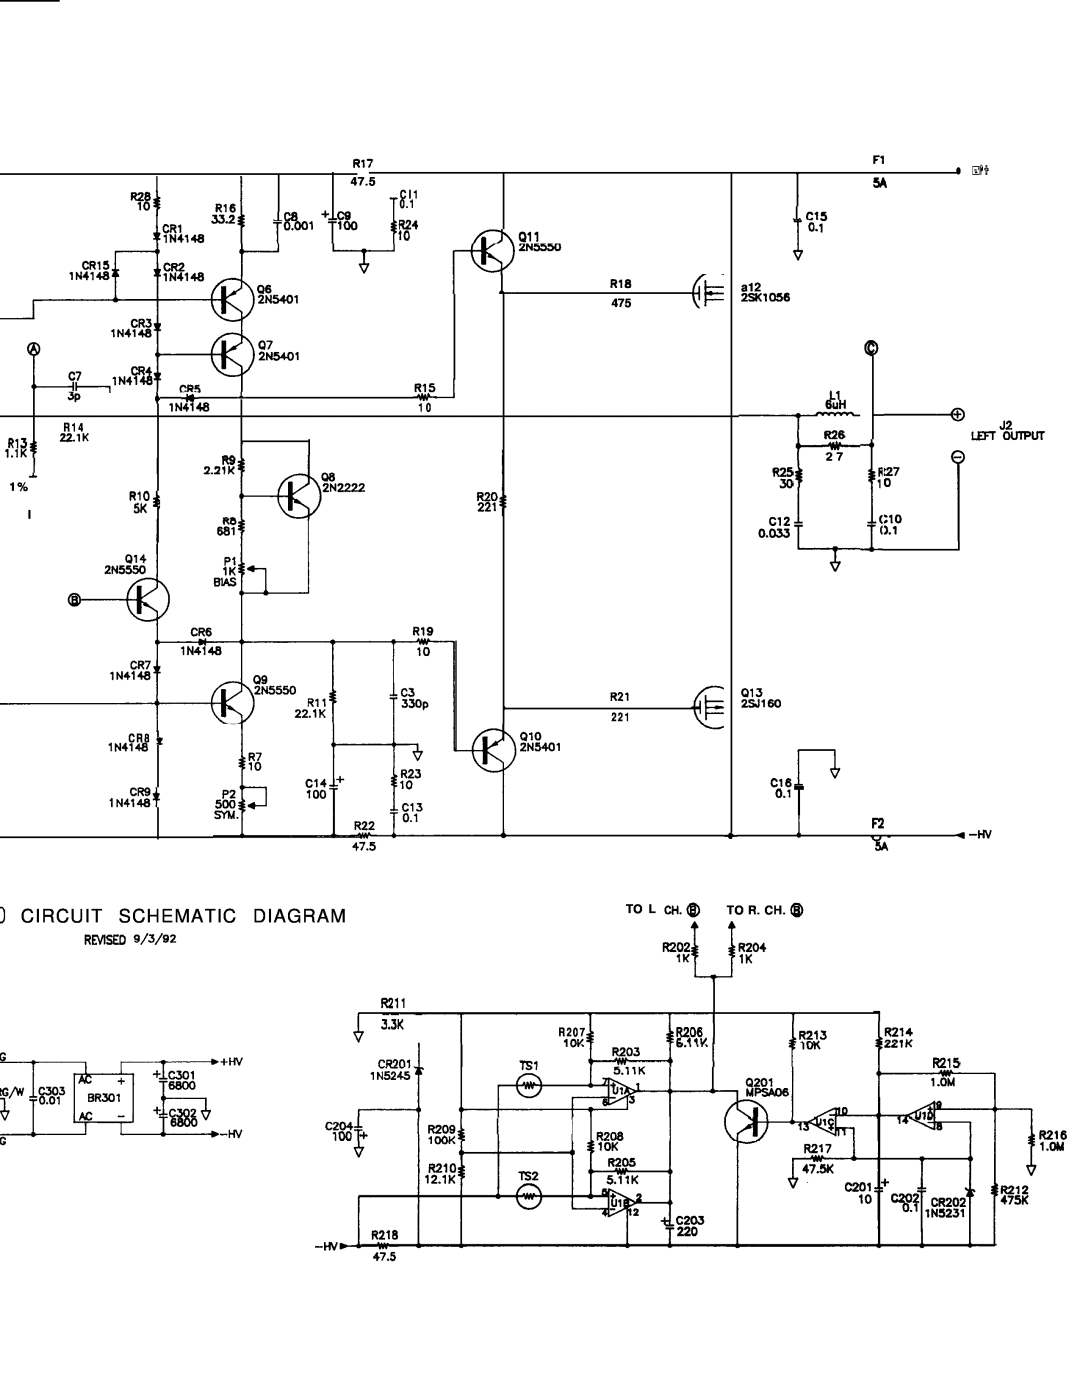 Hafler 9130 manual Yit, I I R208, I Circuit, Schematic Diagram 